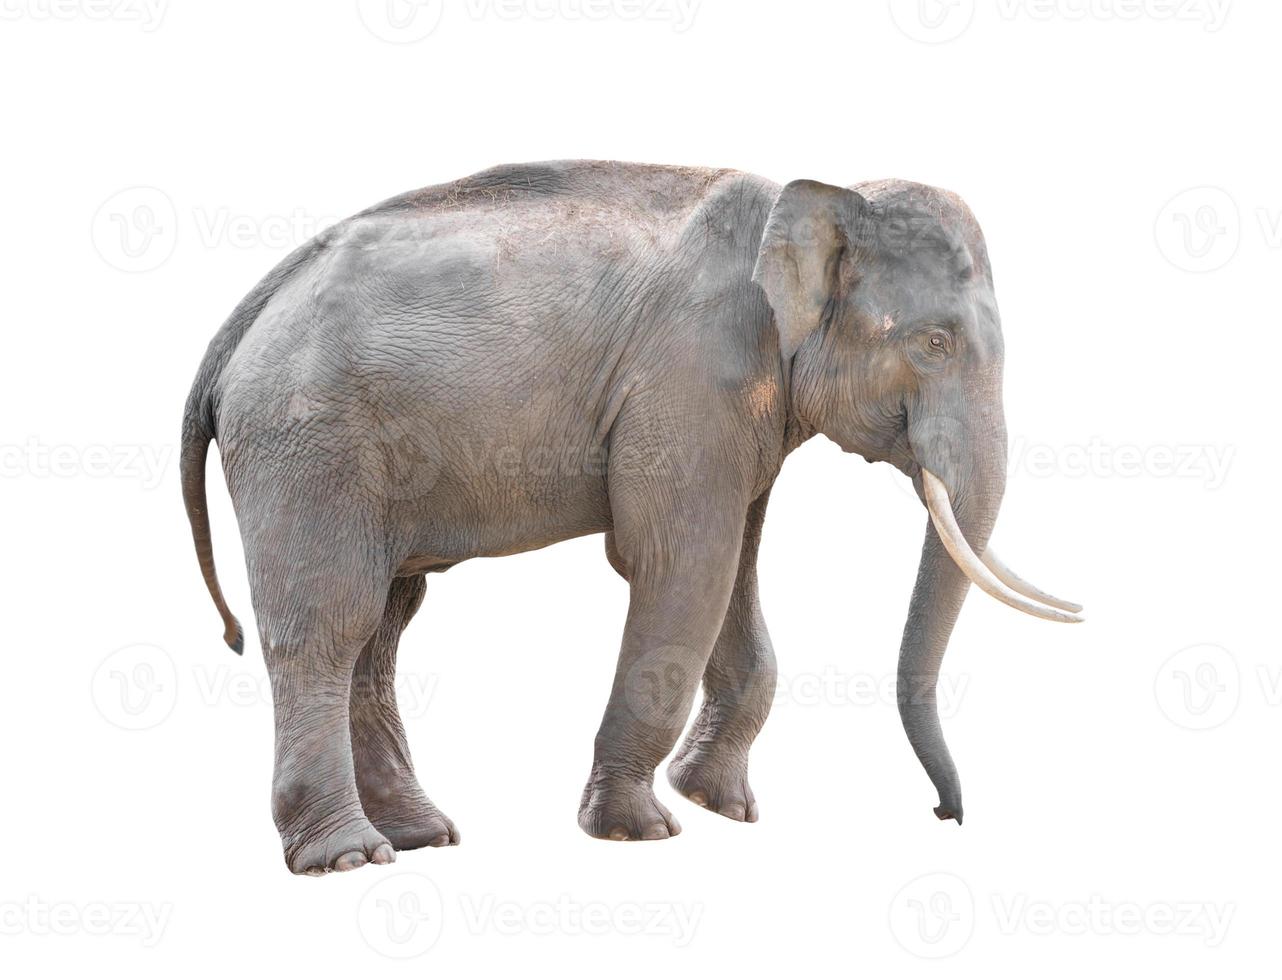 mannelijke Azië olifant geïsoleerd foto